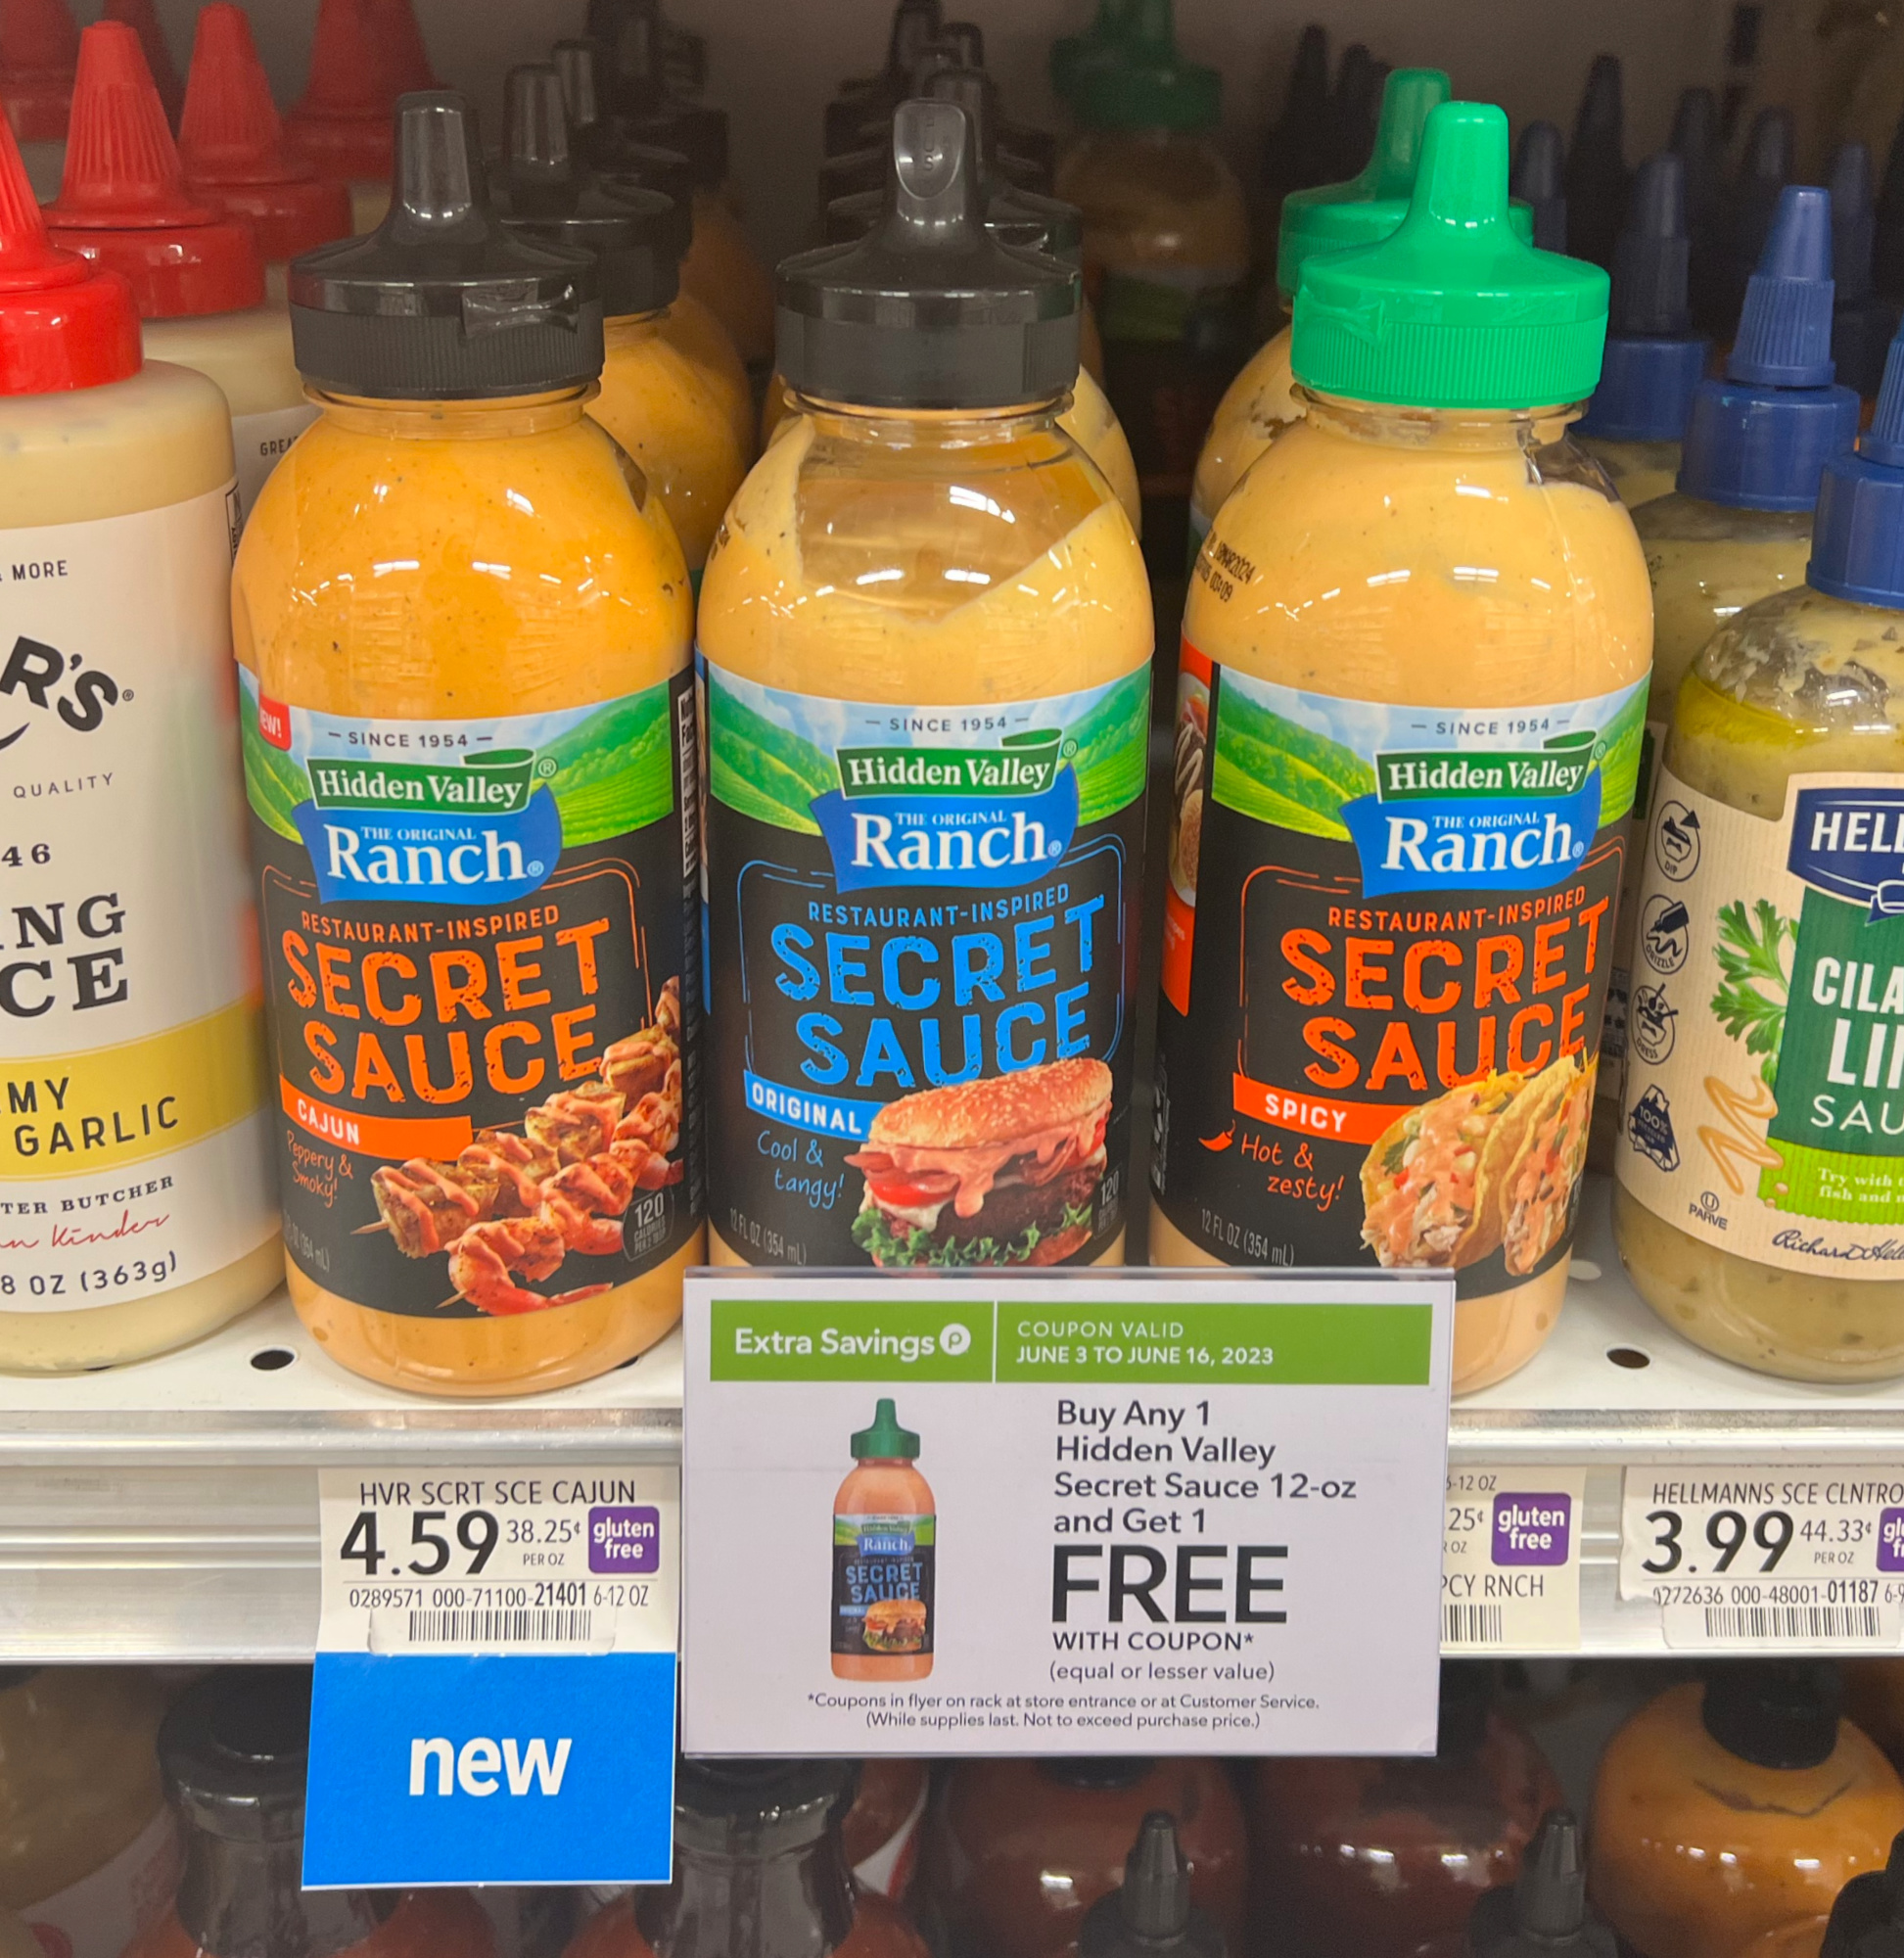 Get The Bottles Of Hidden Valley Secret Sauce For Just $2.30 Each At Publix  - iHeartPublix